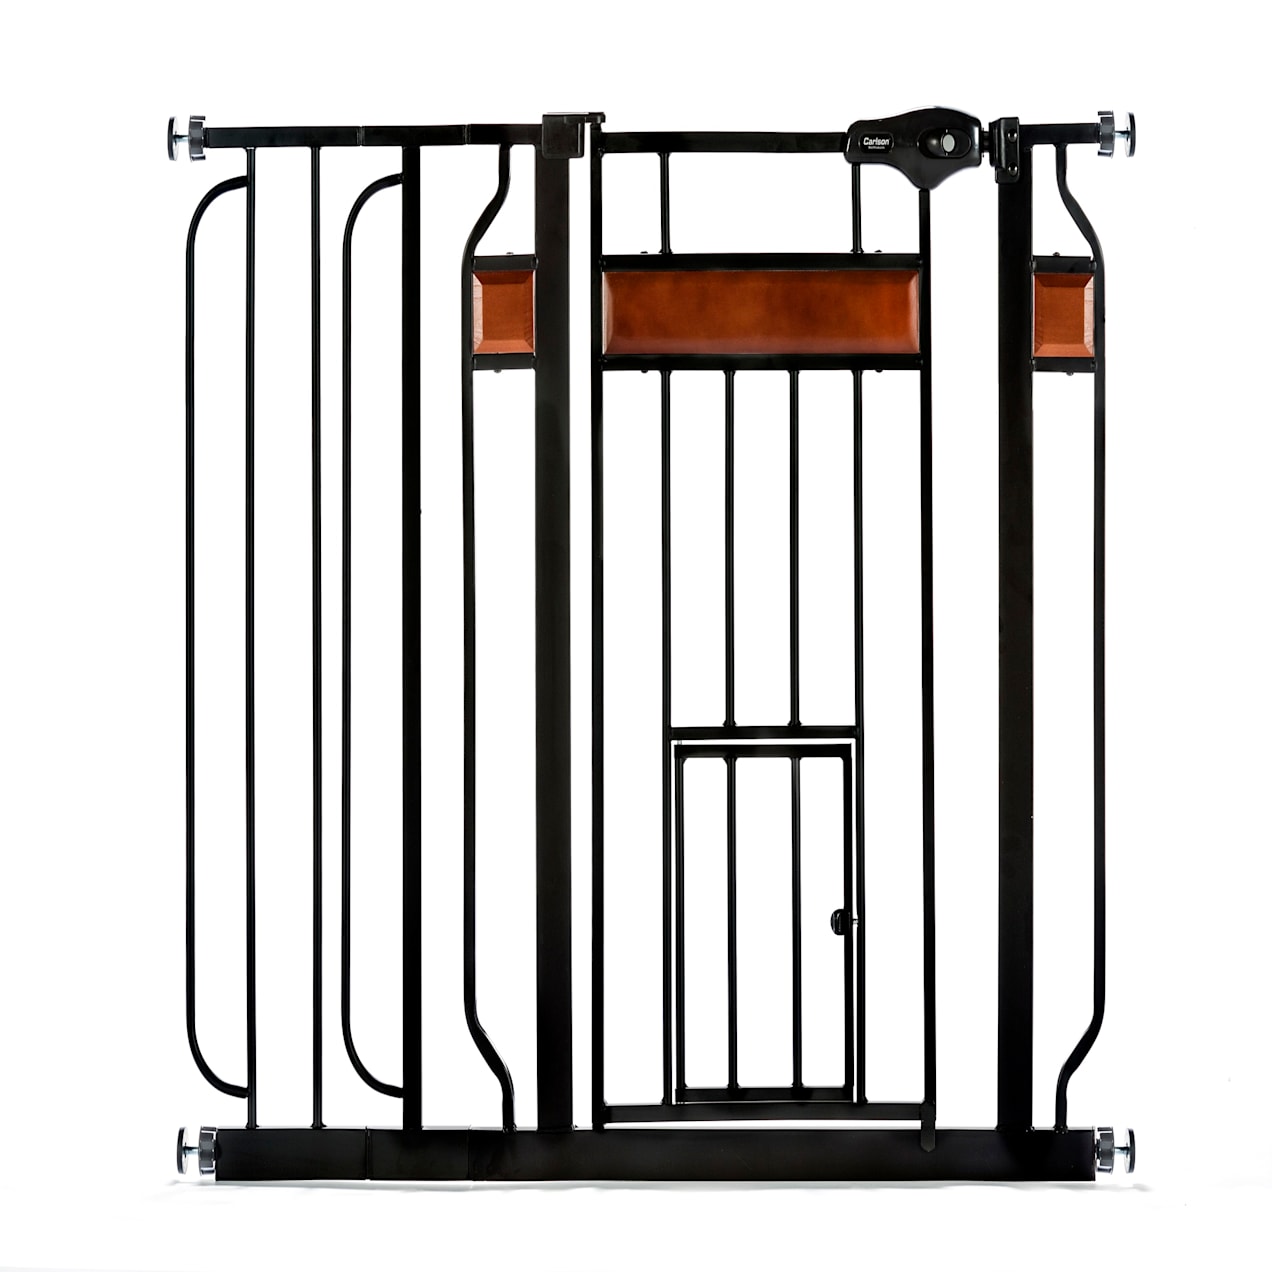 carlson design studio pet gate